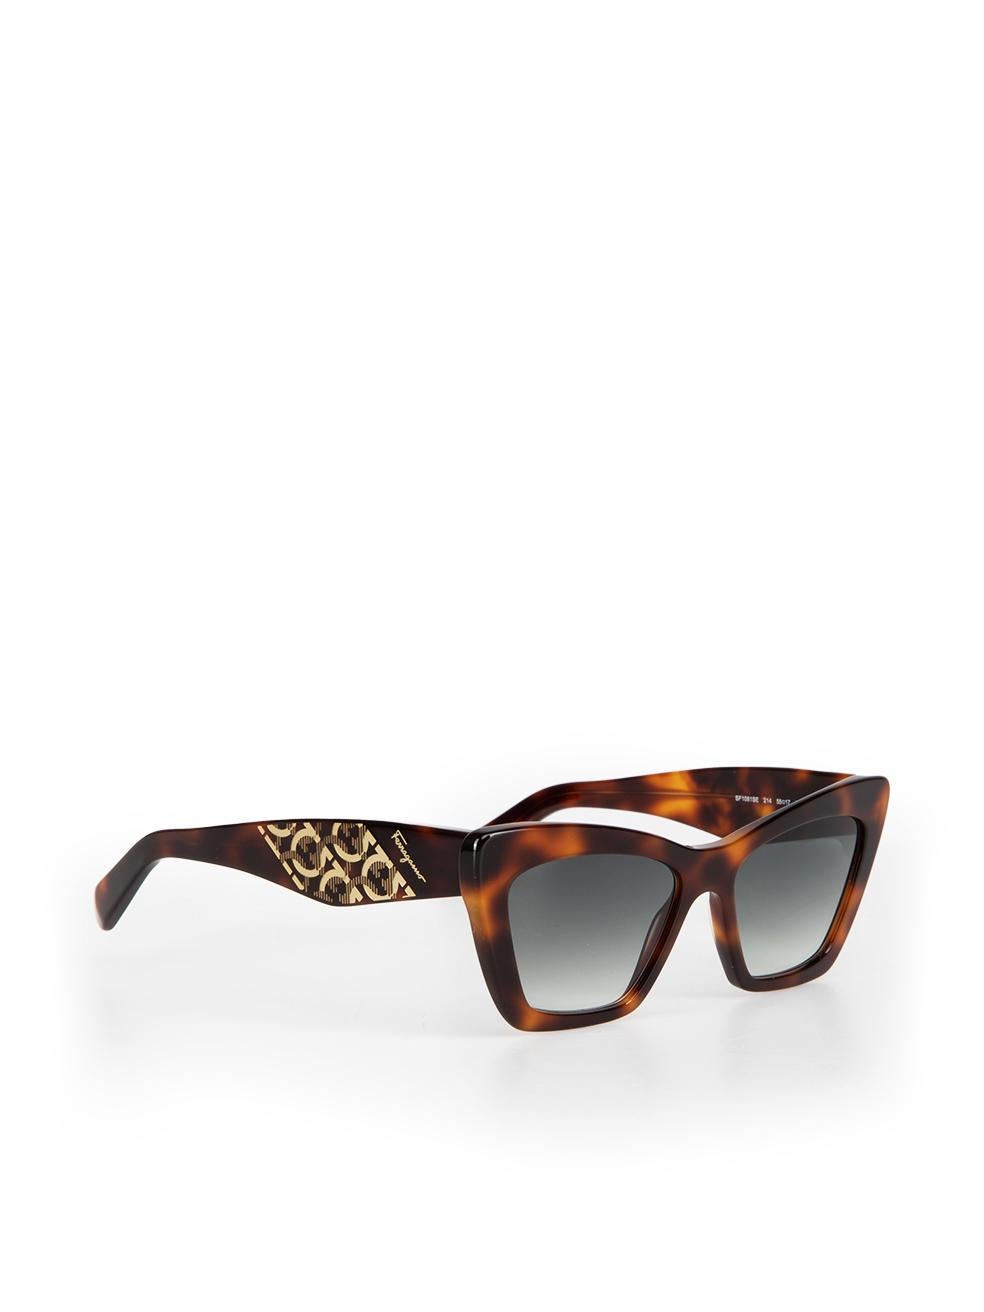 Salvatore Ferragamo Brown Tortoise Cat Eye Sunglasses In New Condition For Sale In London, GB